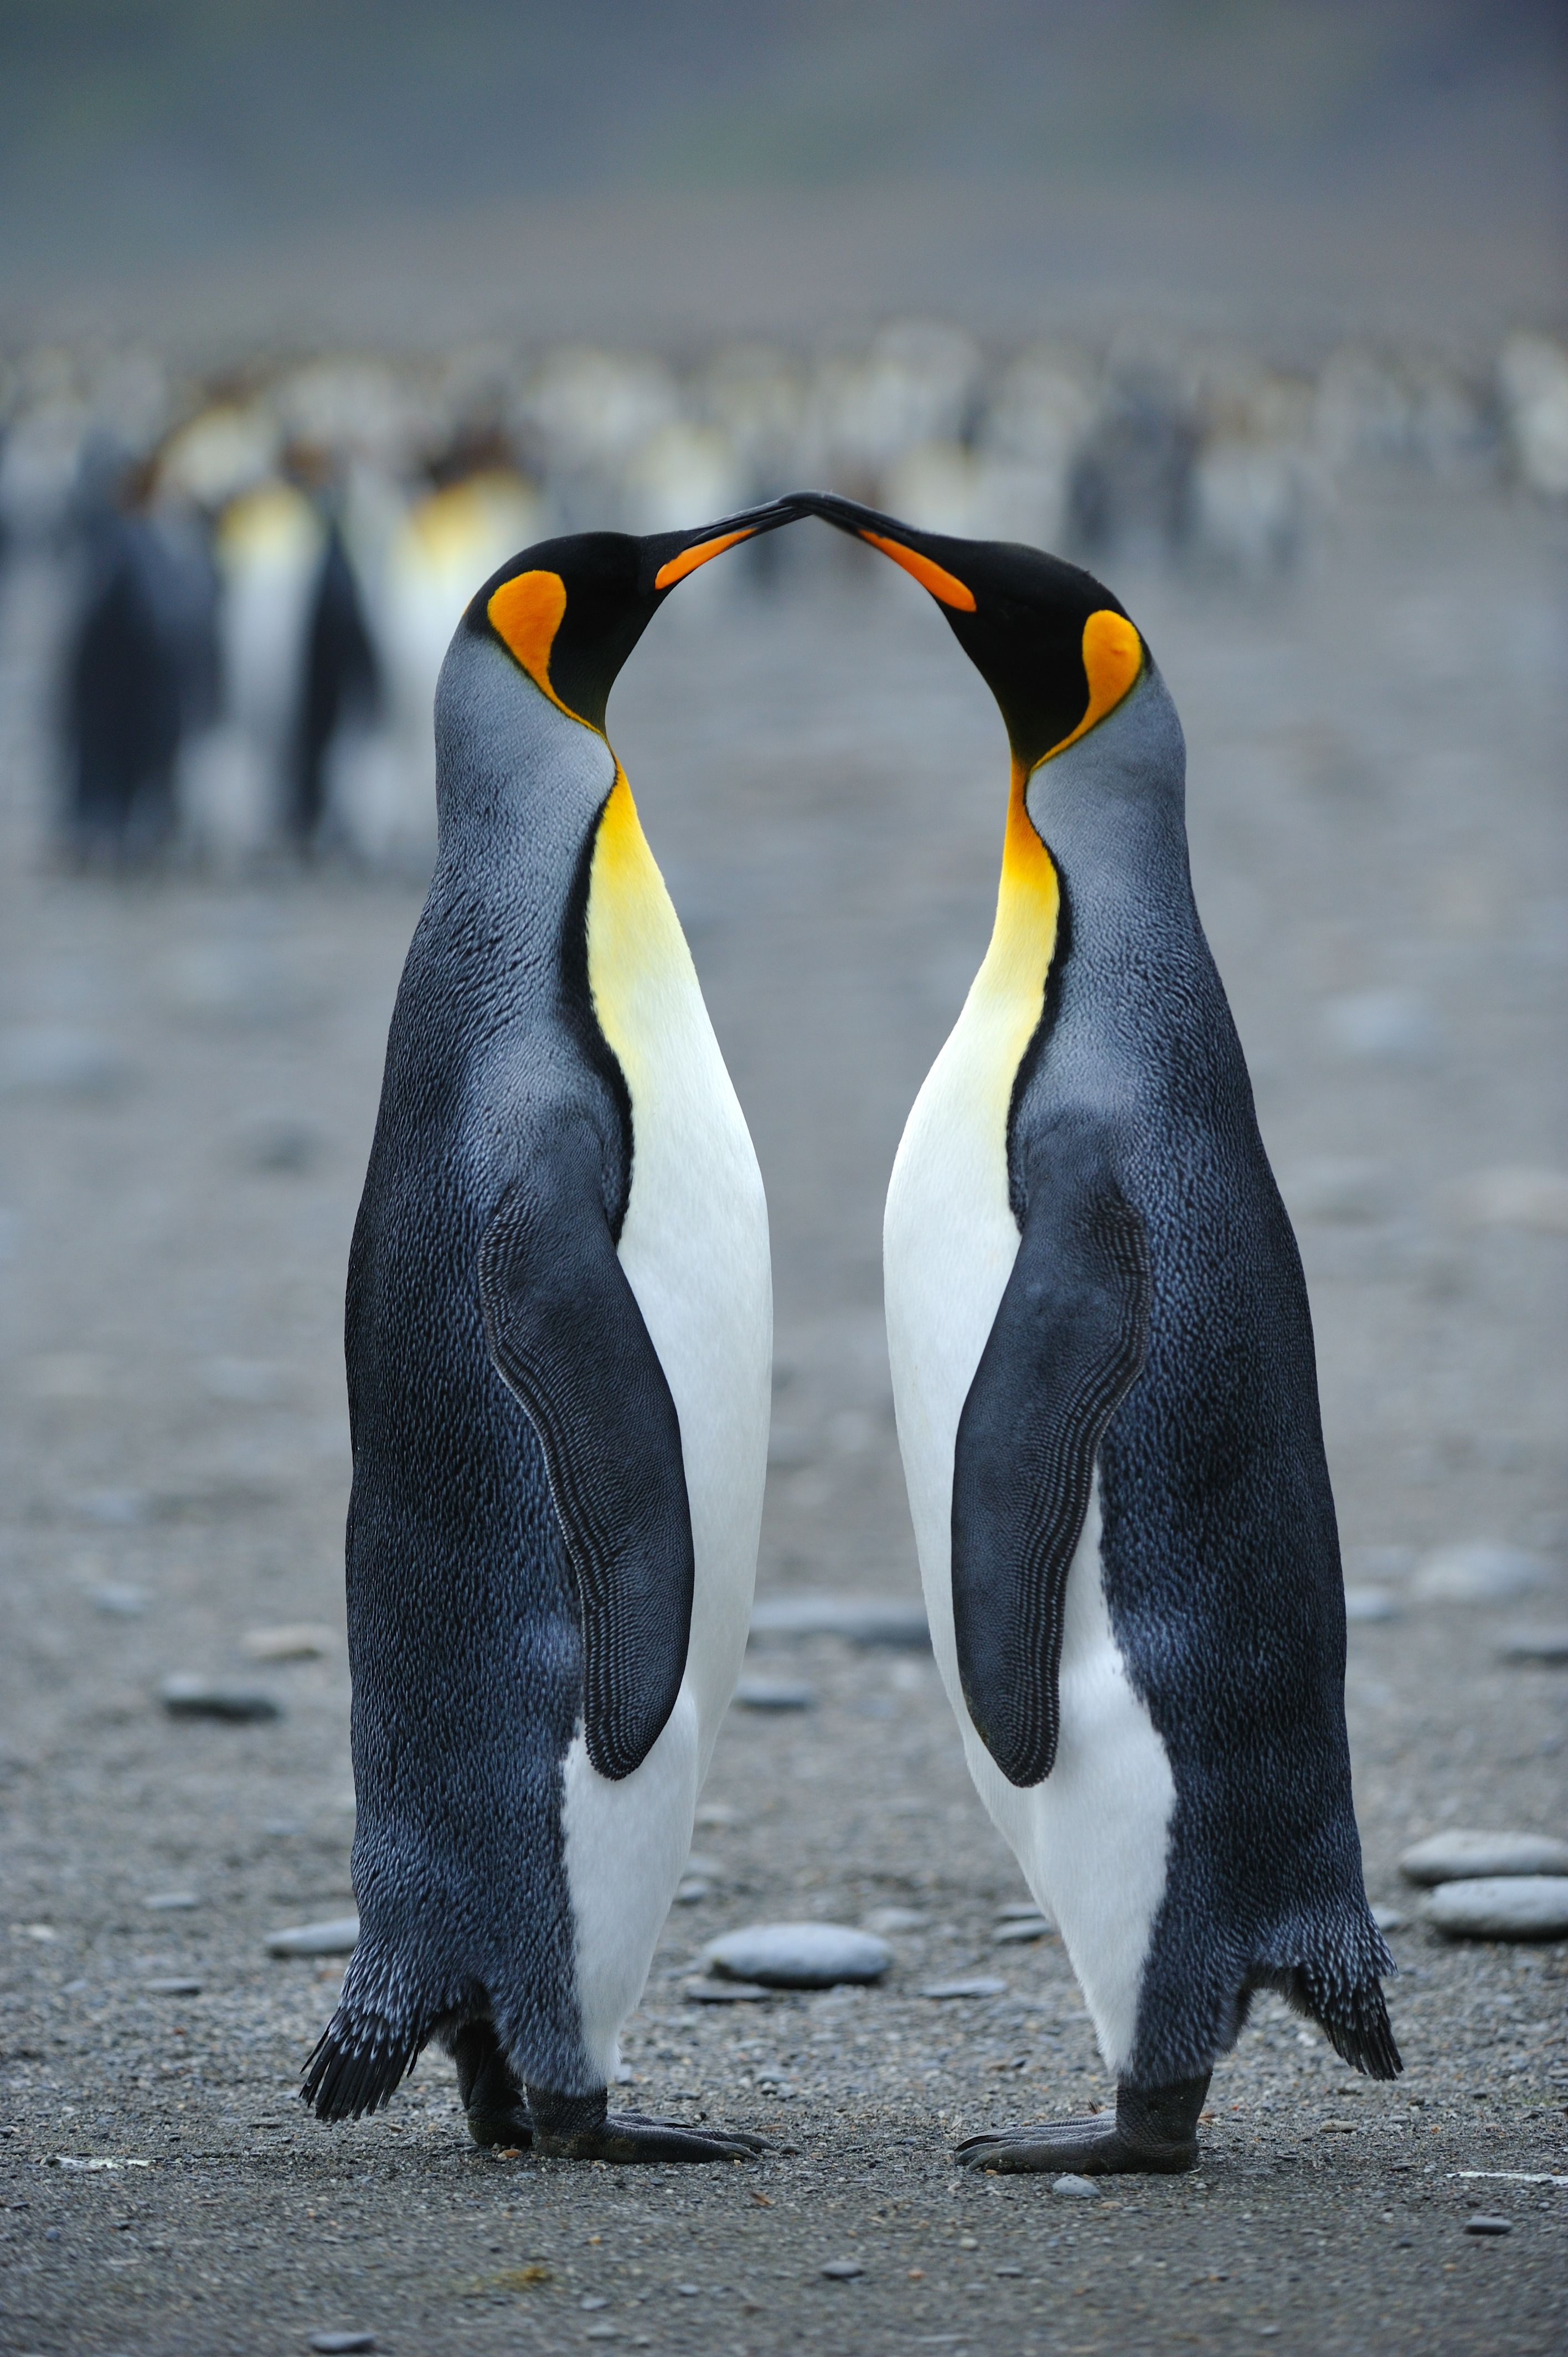 Is penguin a mammal